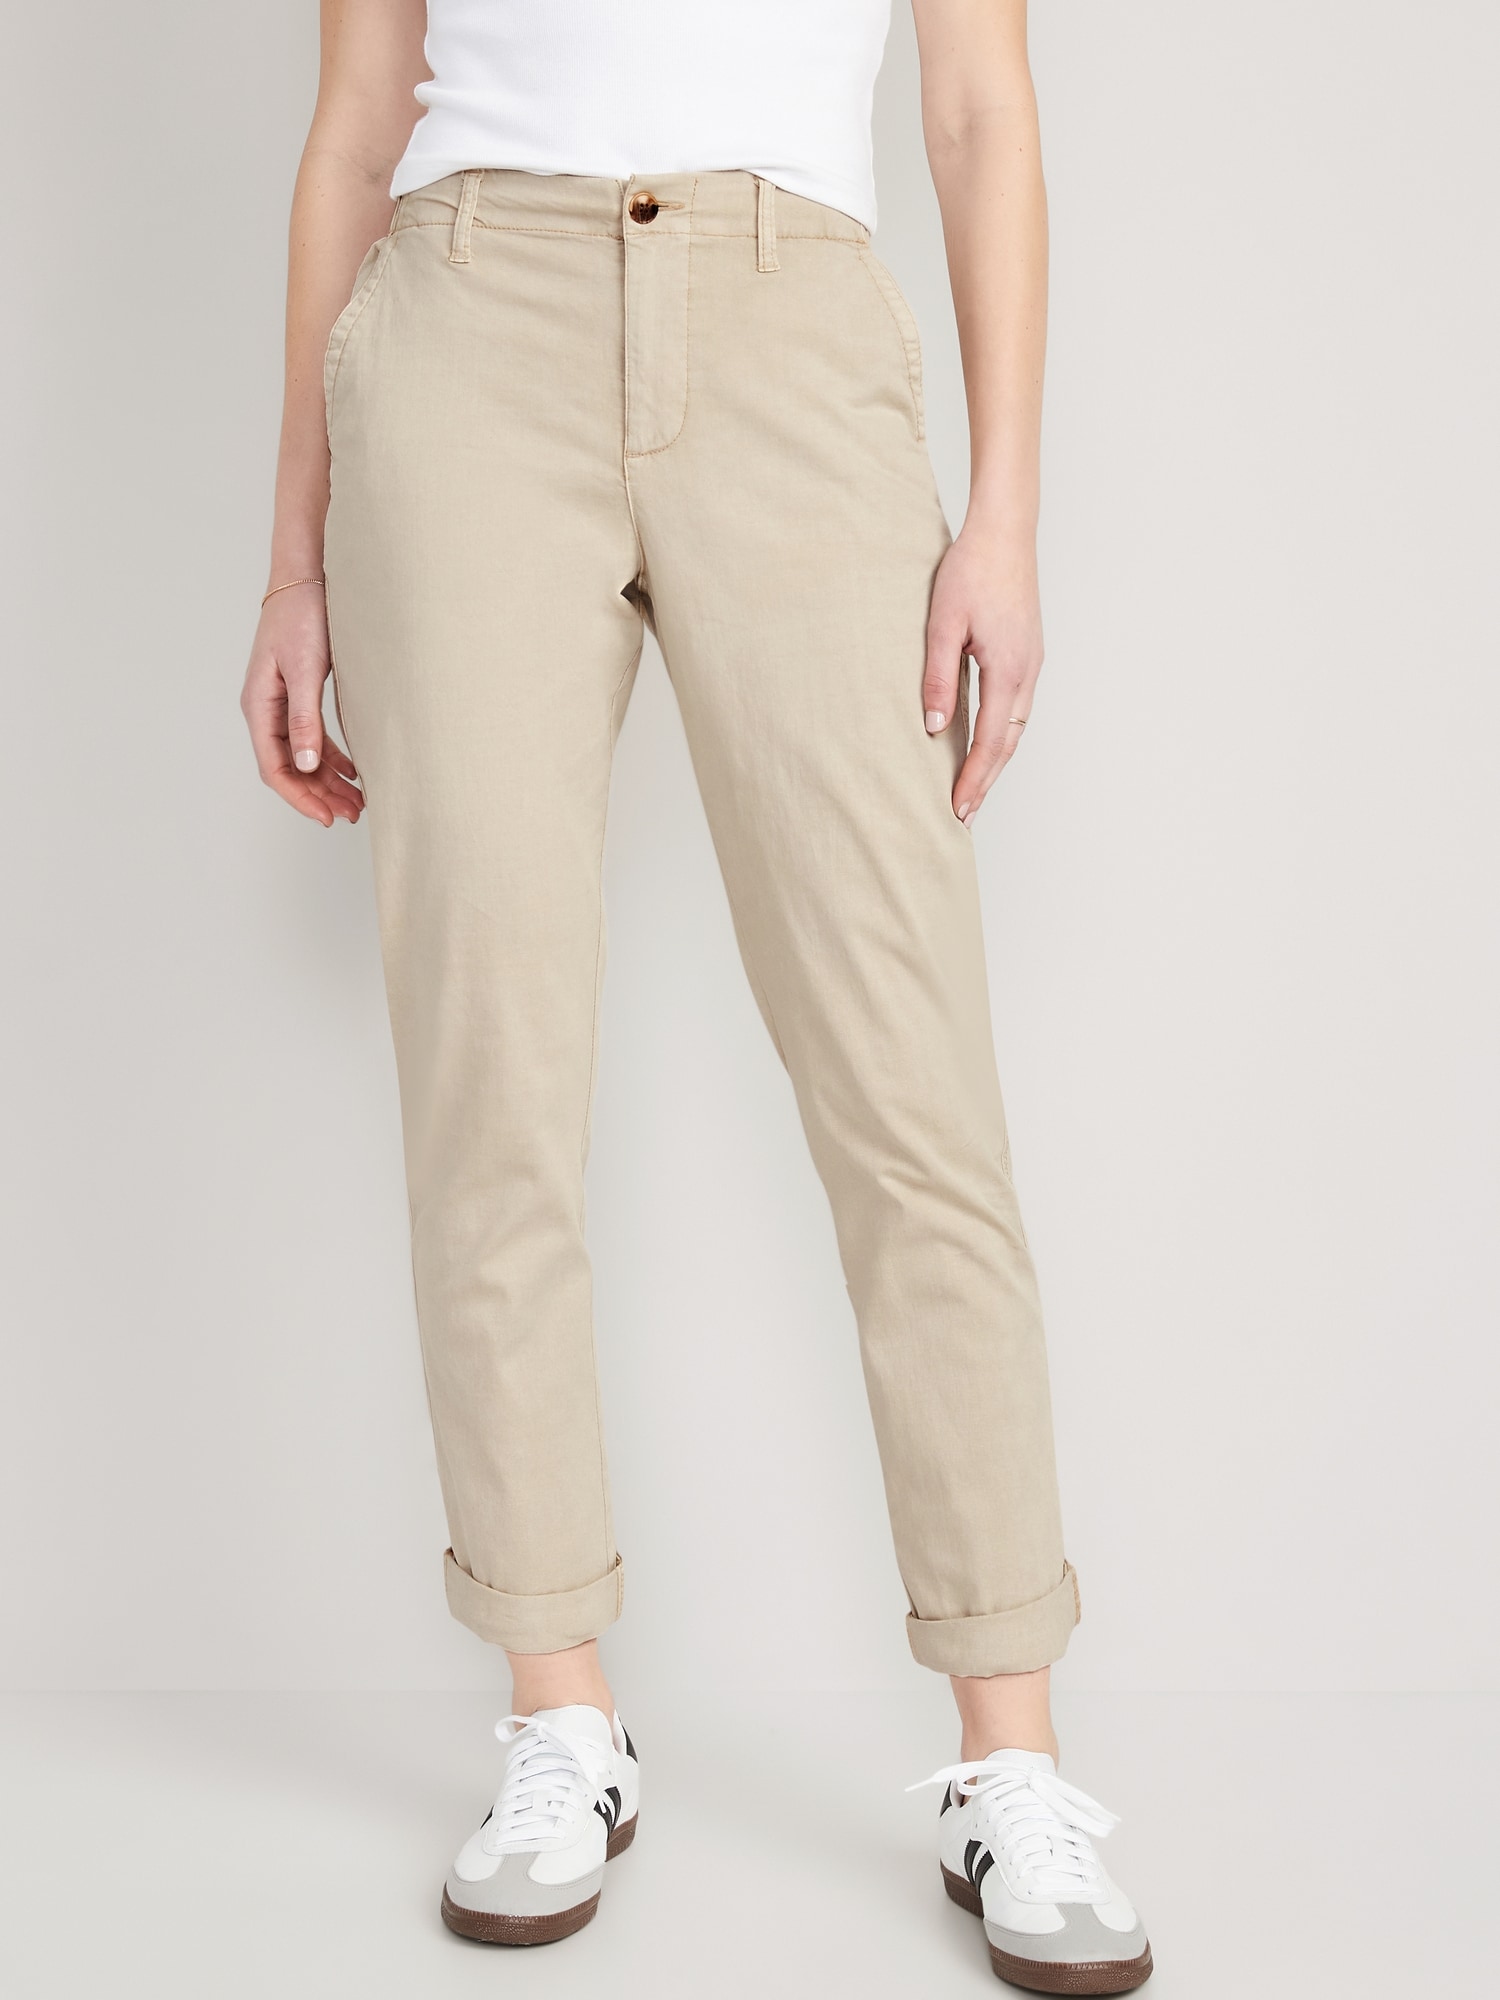 Women's Chino & Khaki Pants